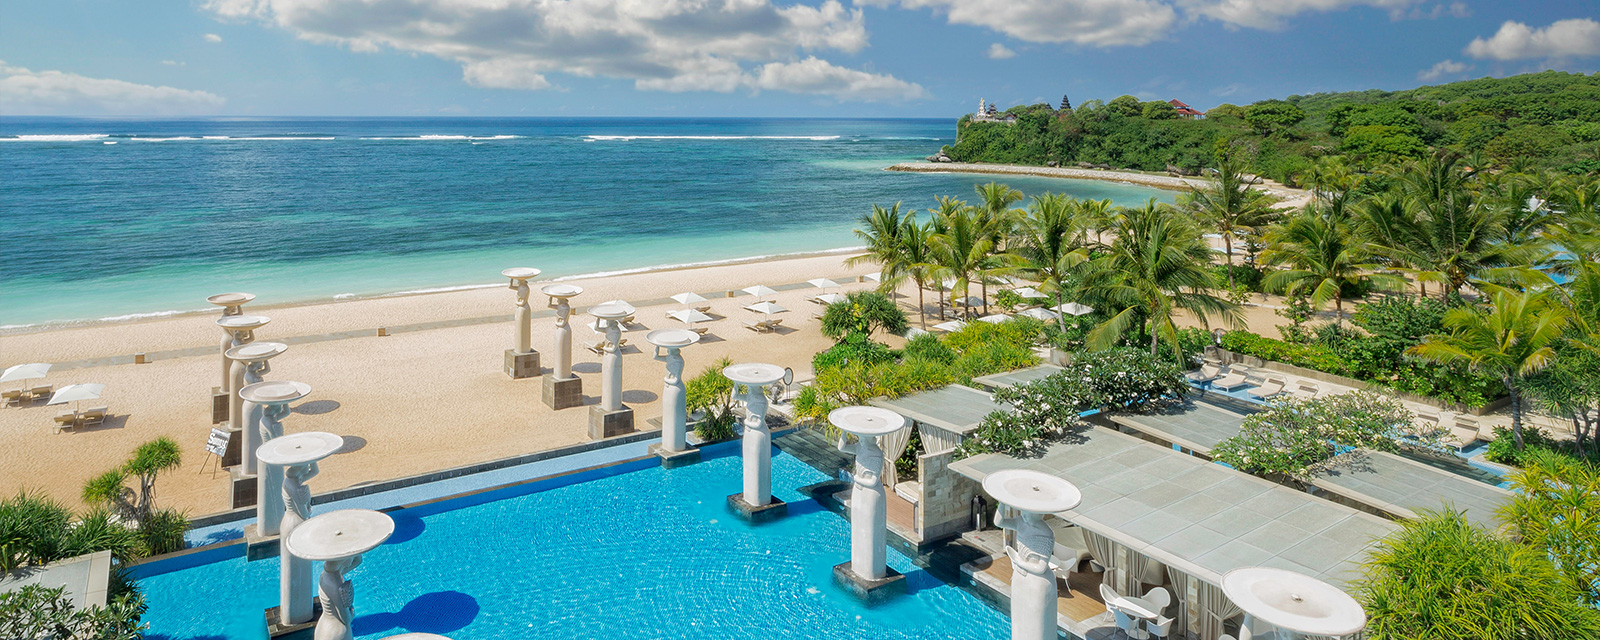 The Mulia Hotels & Resorts – Redefining Luxury in Bali & Jakarta